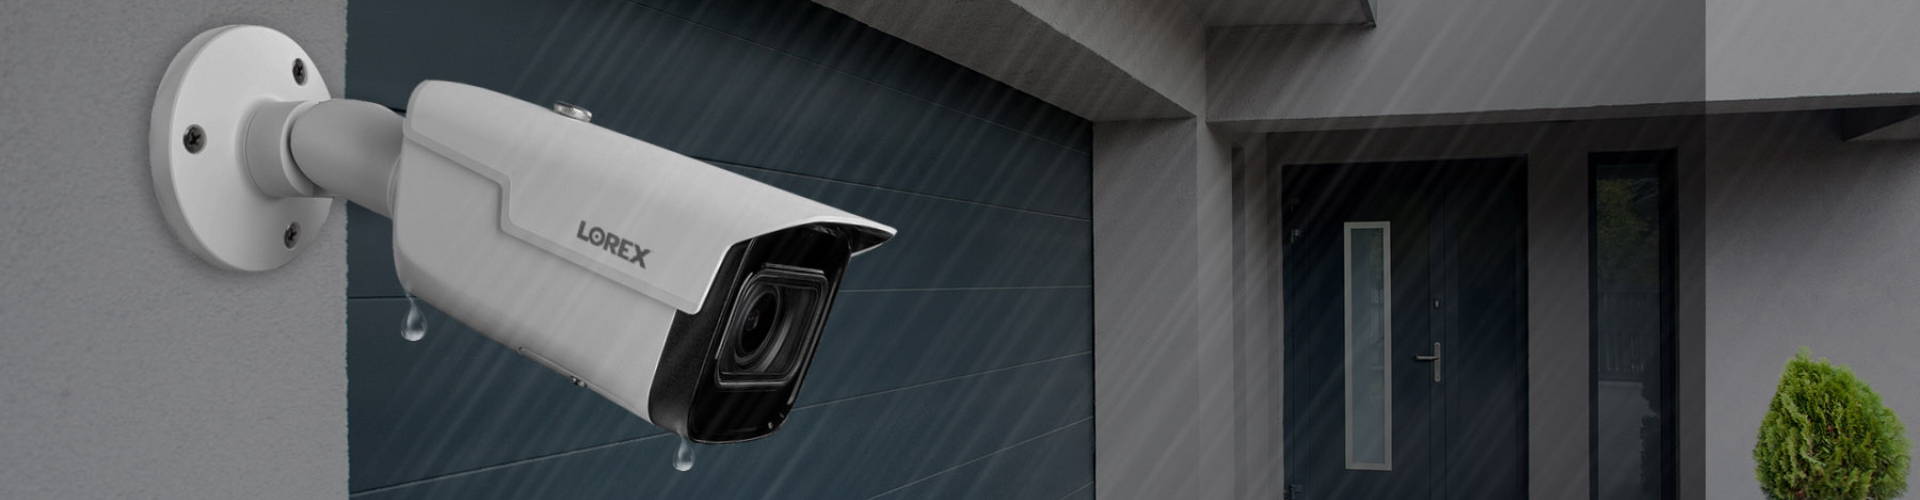 Weatherproof Security Camera in the rain